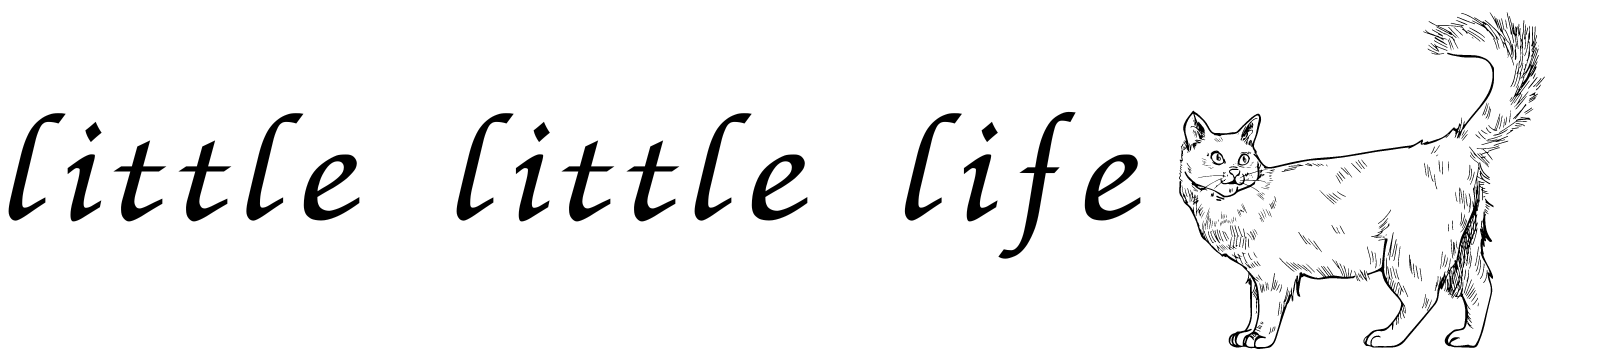 little little life